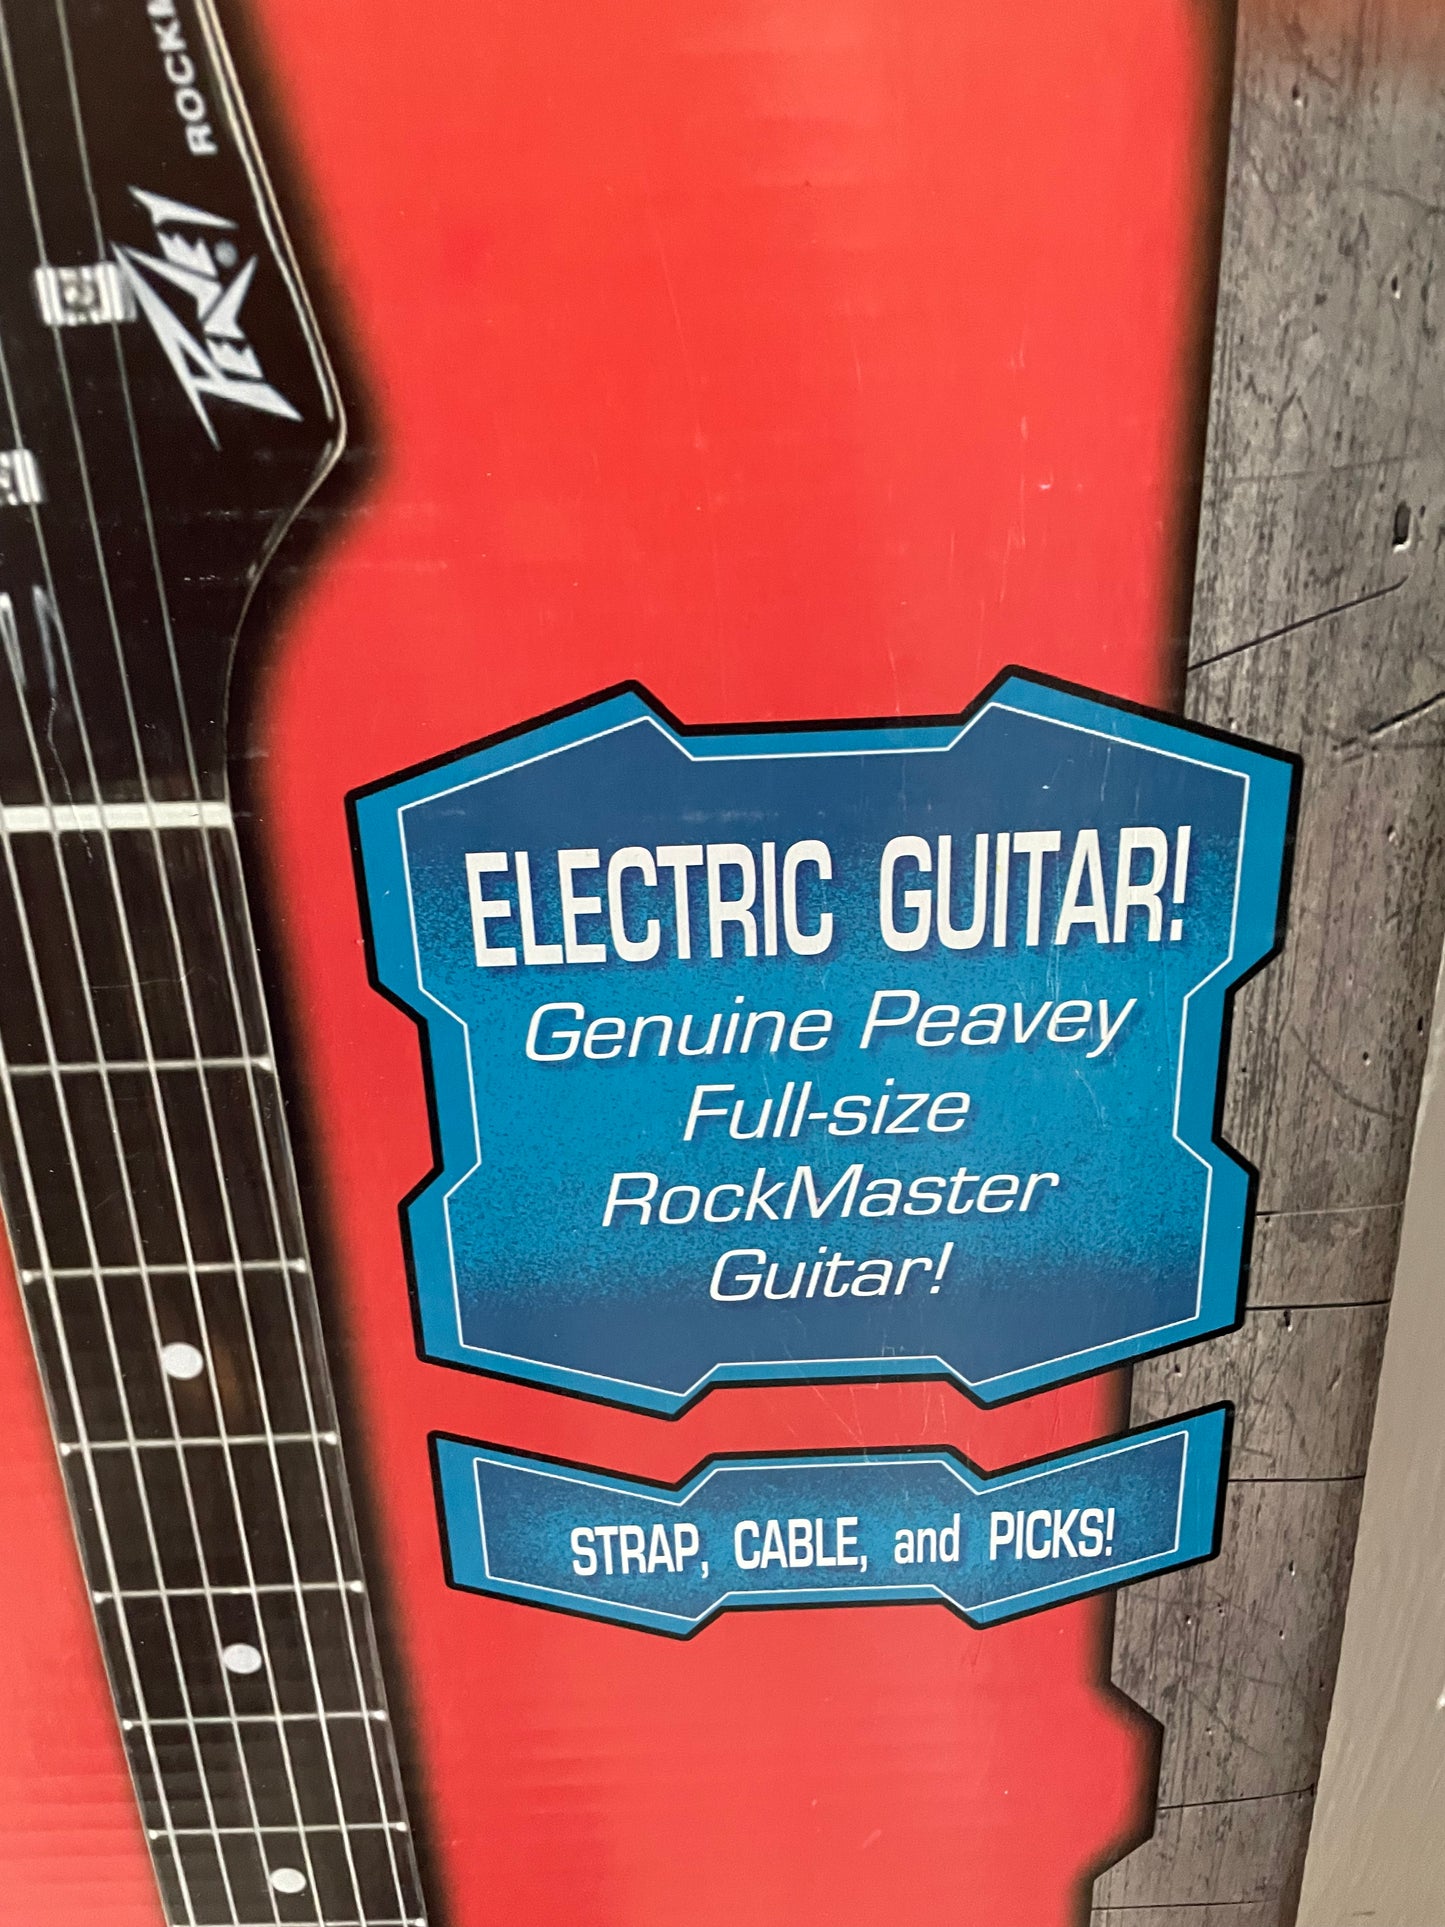 SDCC 2014 Exclusive Star Wars Lightside Peavey Guitar (31 of50)